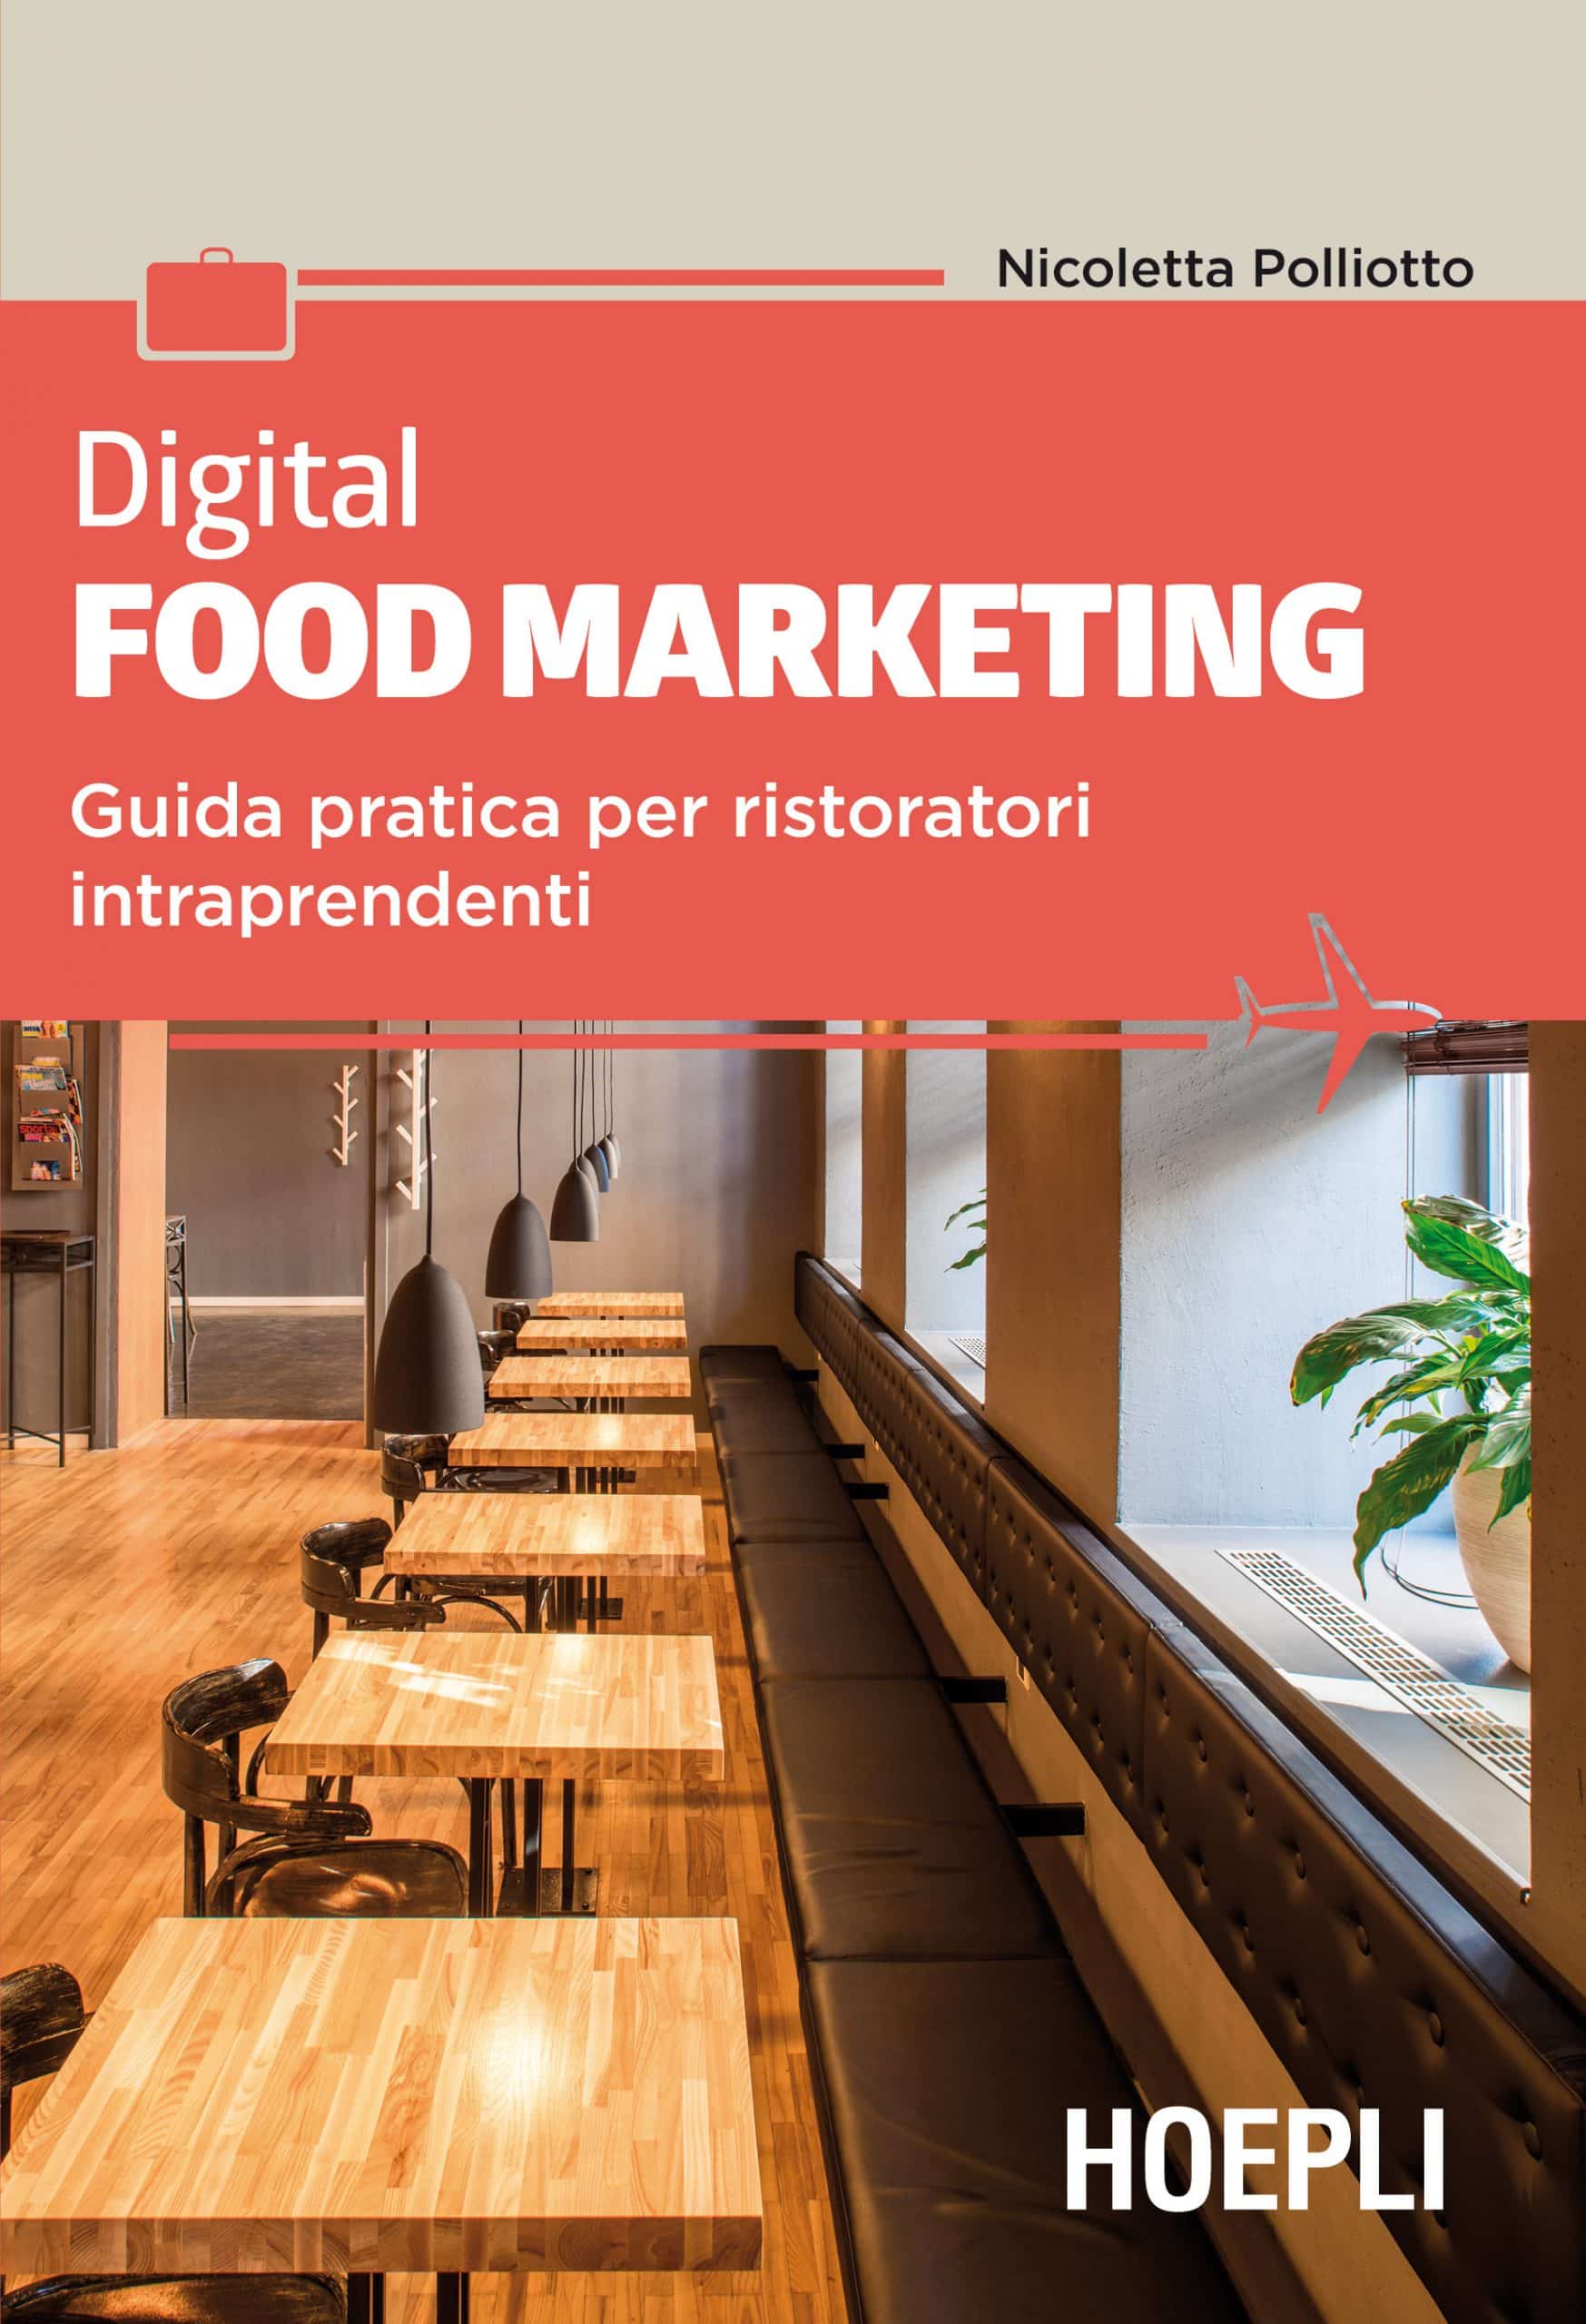 digital-food-marketing-coverpolliotto-1